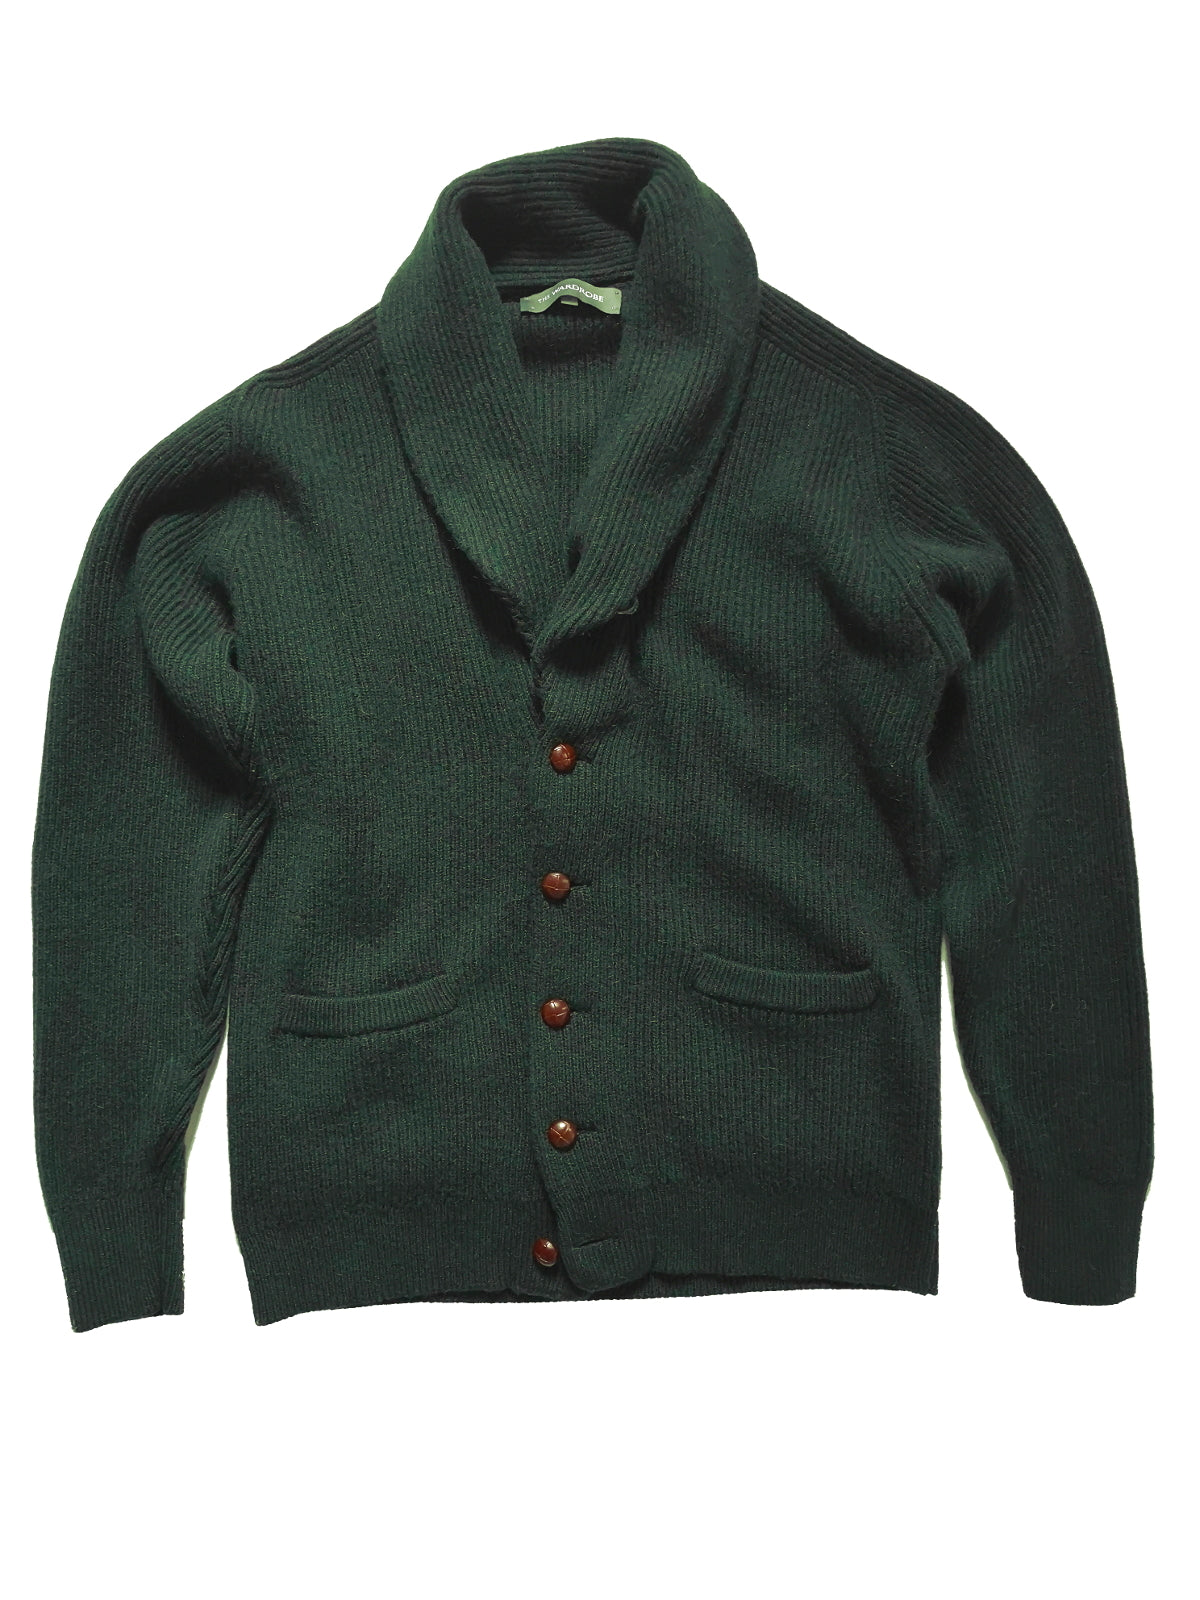 the-wardrobe-shawl-collar-cardigan-camel-hair-bottle-green-2_1200x1600.jpg